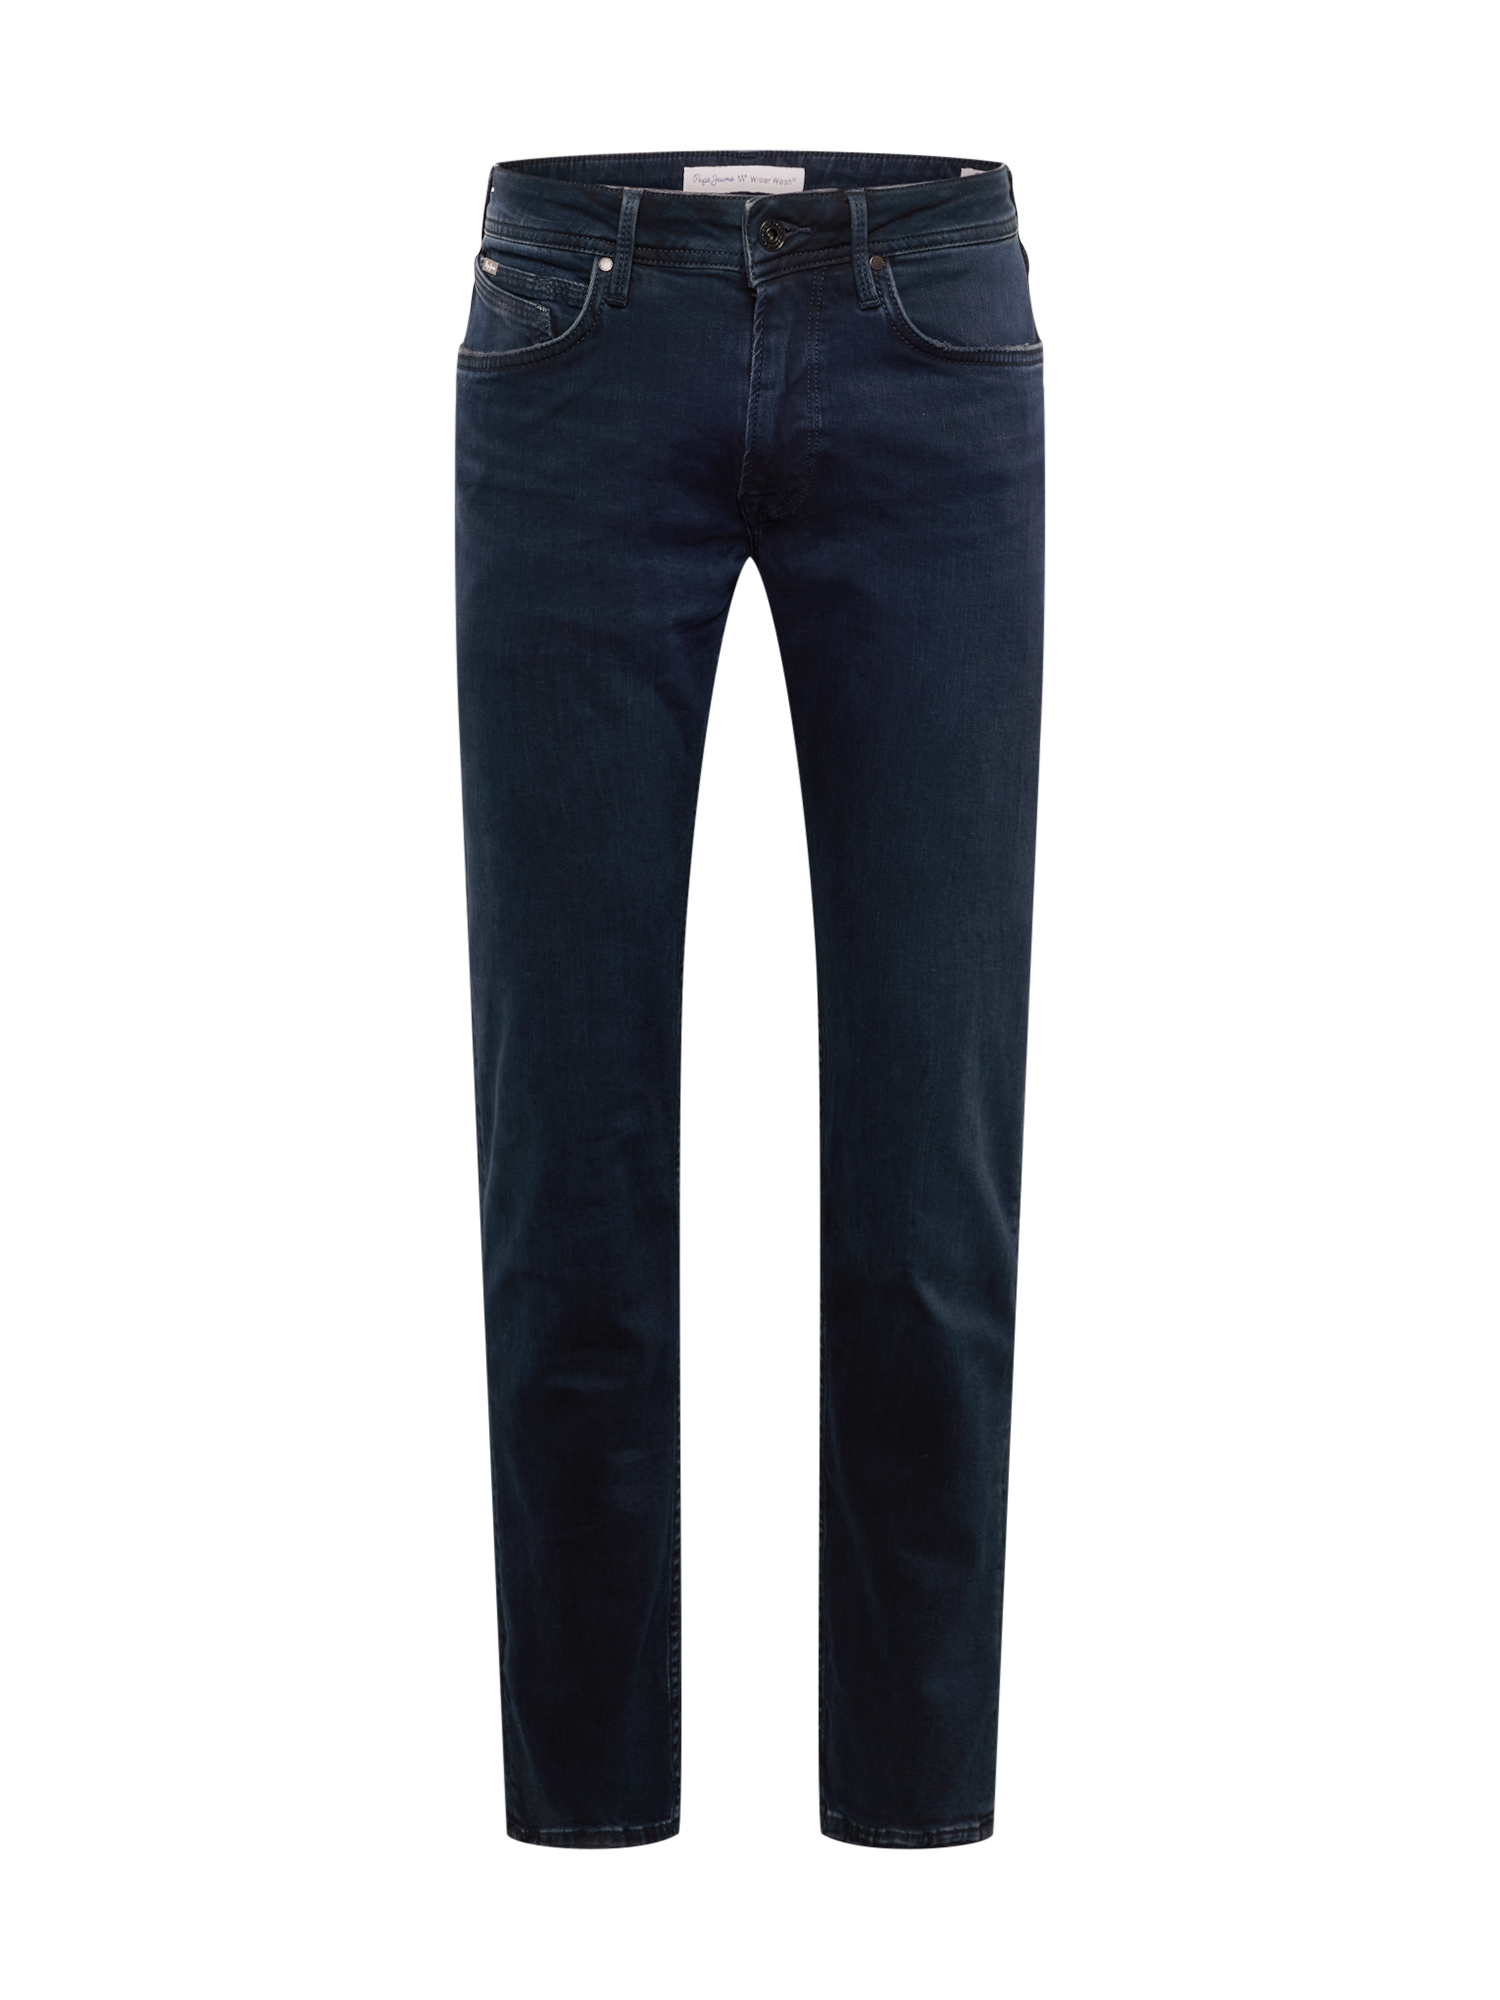 h84e2 Uomo Pepe Jeans Jeans HATCH in Blu Scuro 